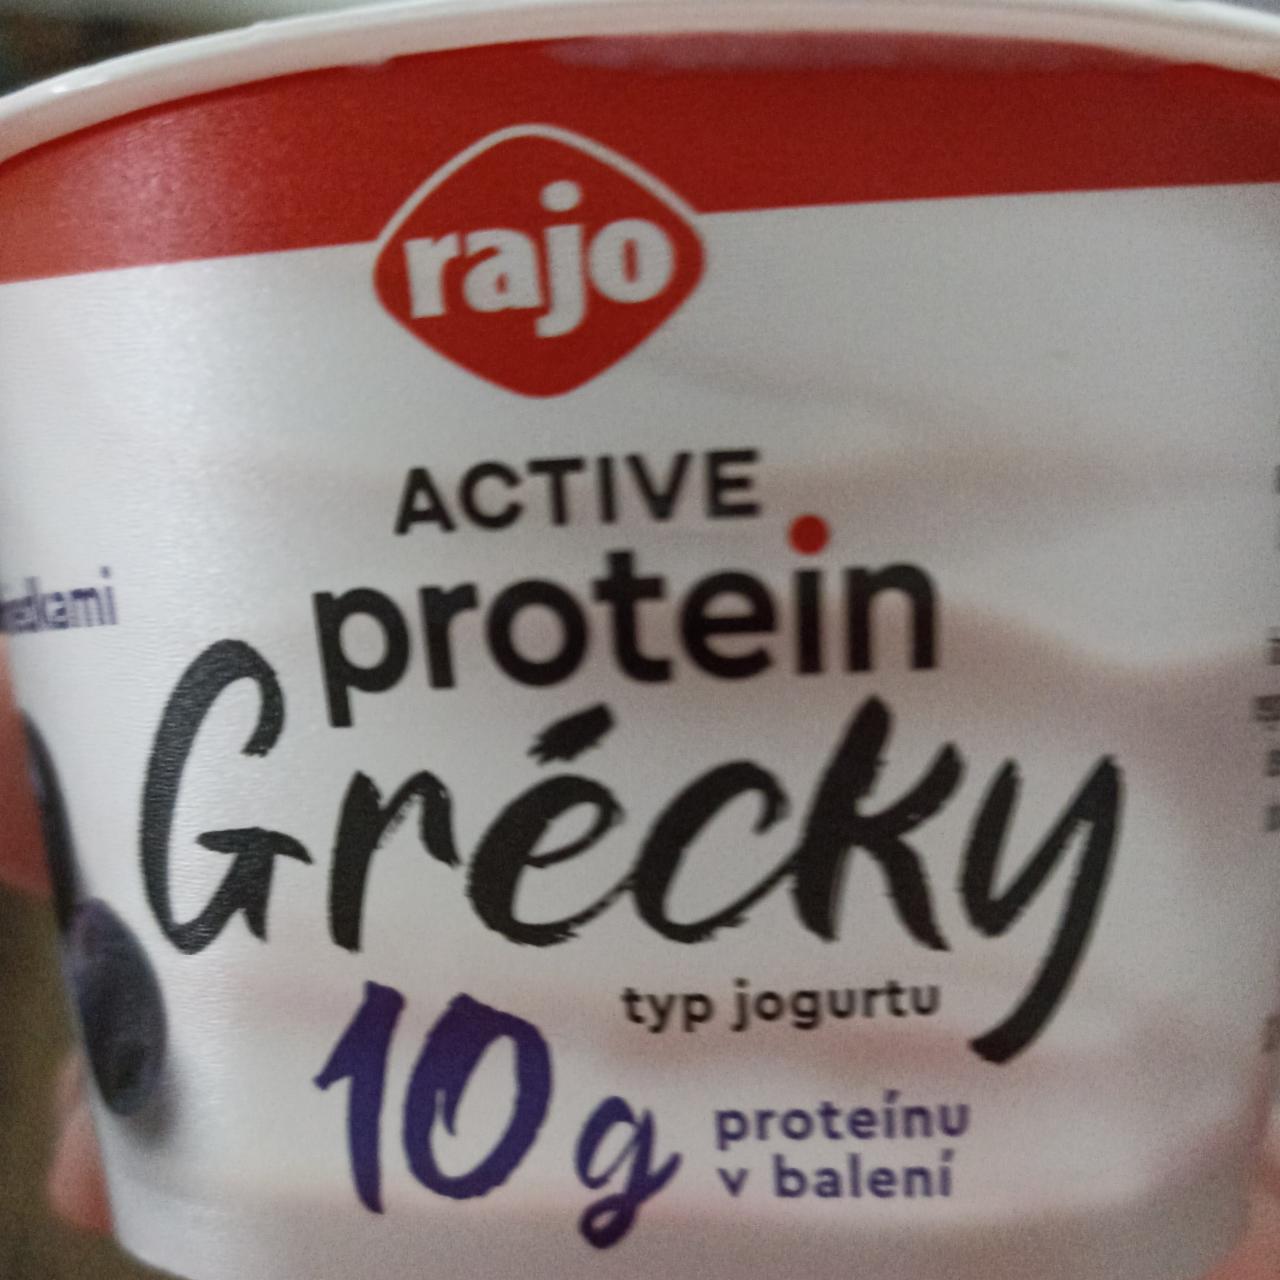 Фото - Active protein Grécky typ jogurtu s čučoriedkami Rajo